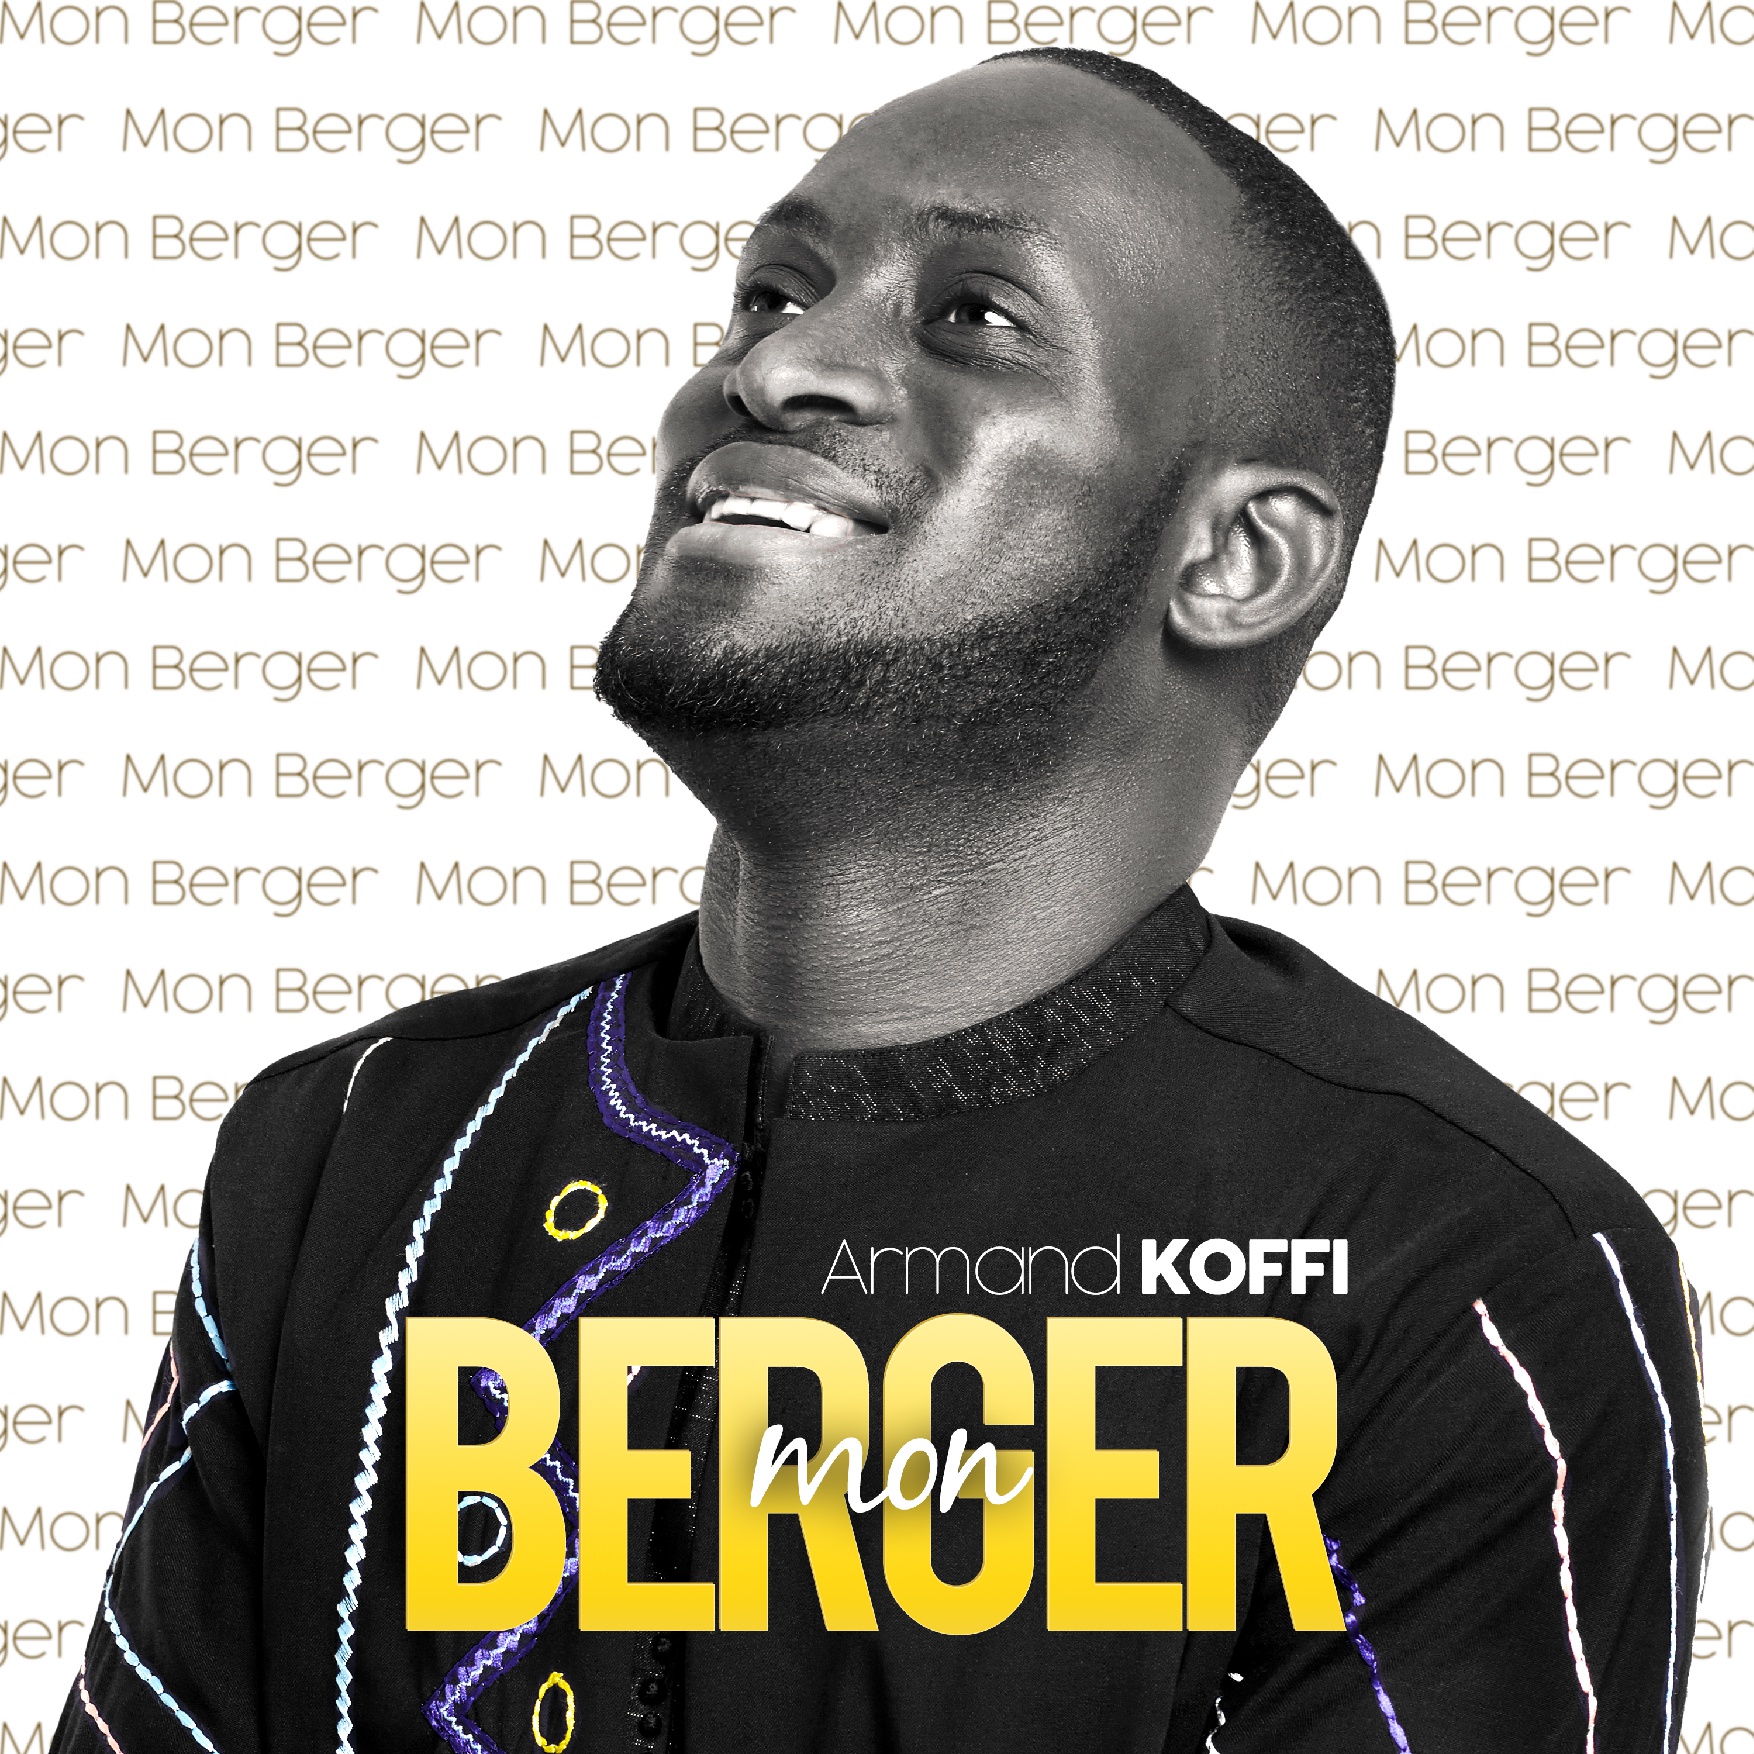 Mon Berger – Armand KOFFI